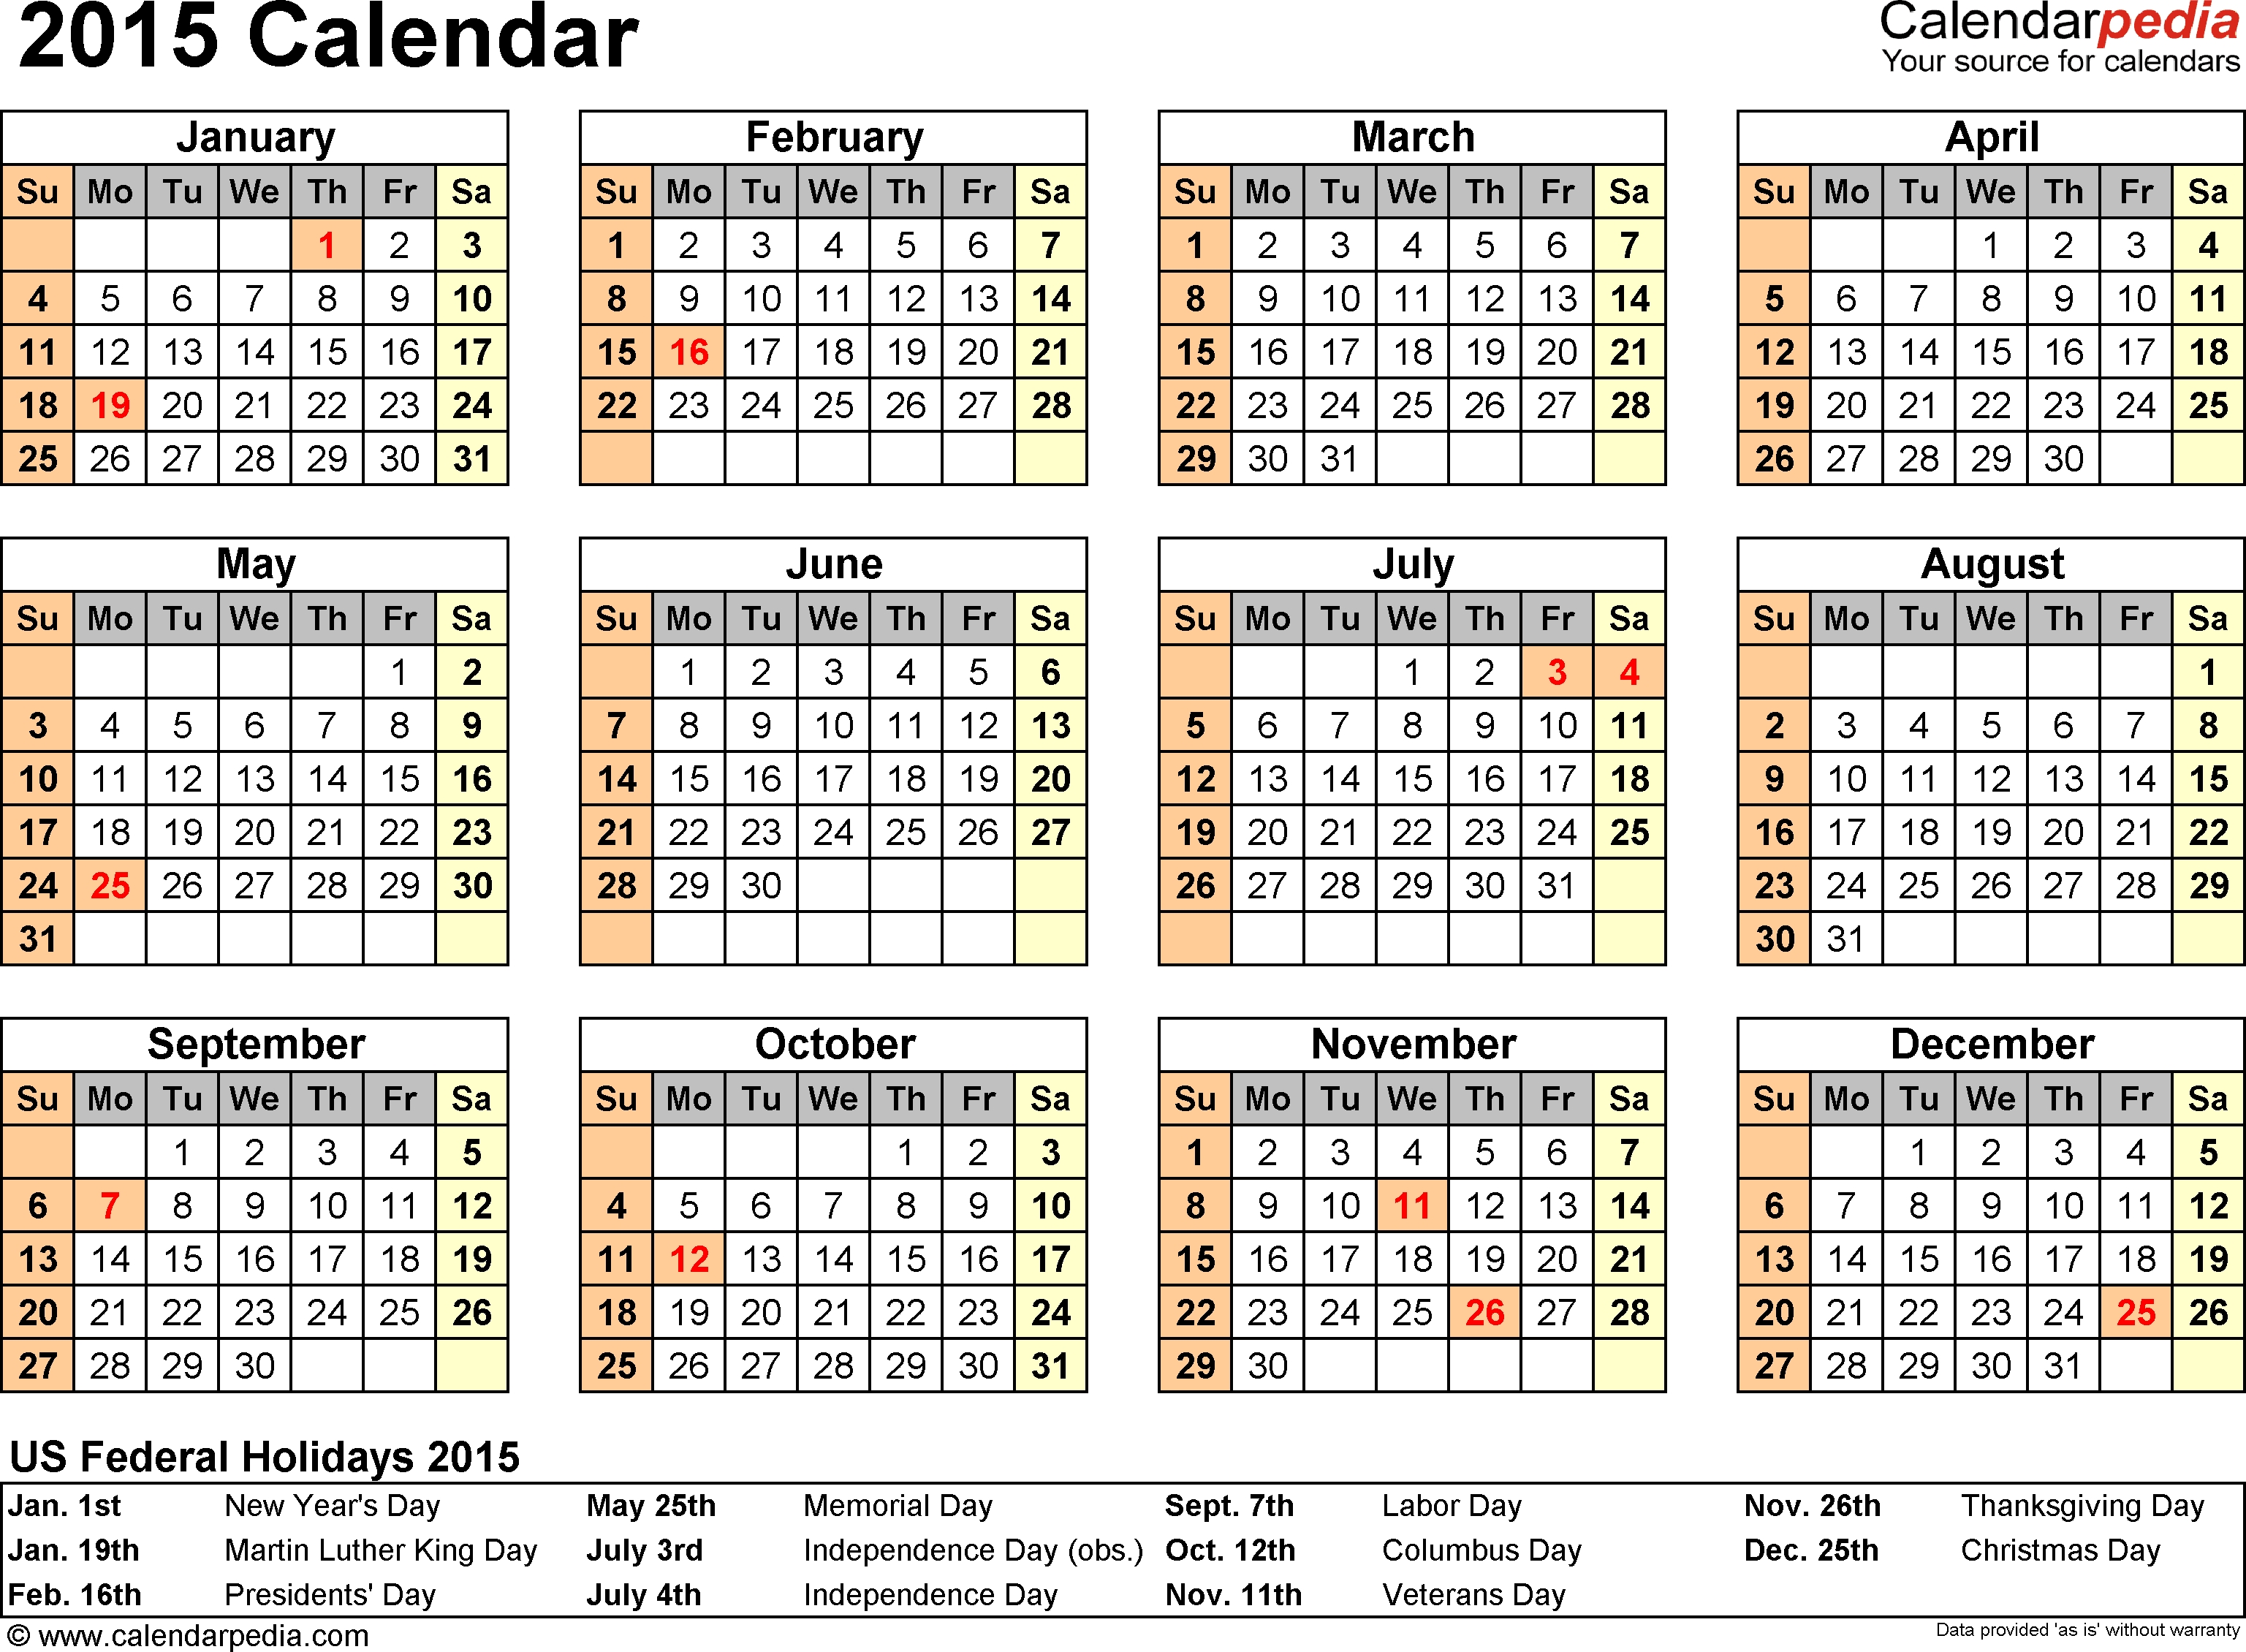 2015 Calendar Pdf - 16 Free Printable Calendar Templates For Pdf regarding Downloadable Employee Vacation Calendar 2015